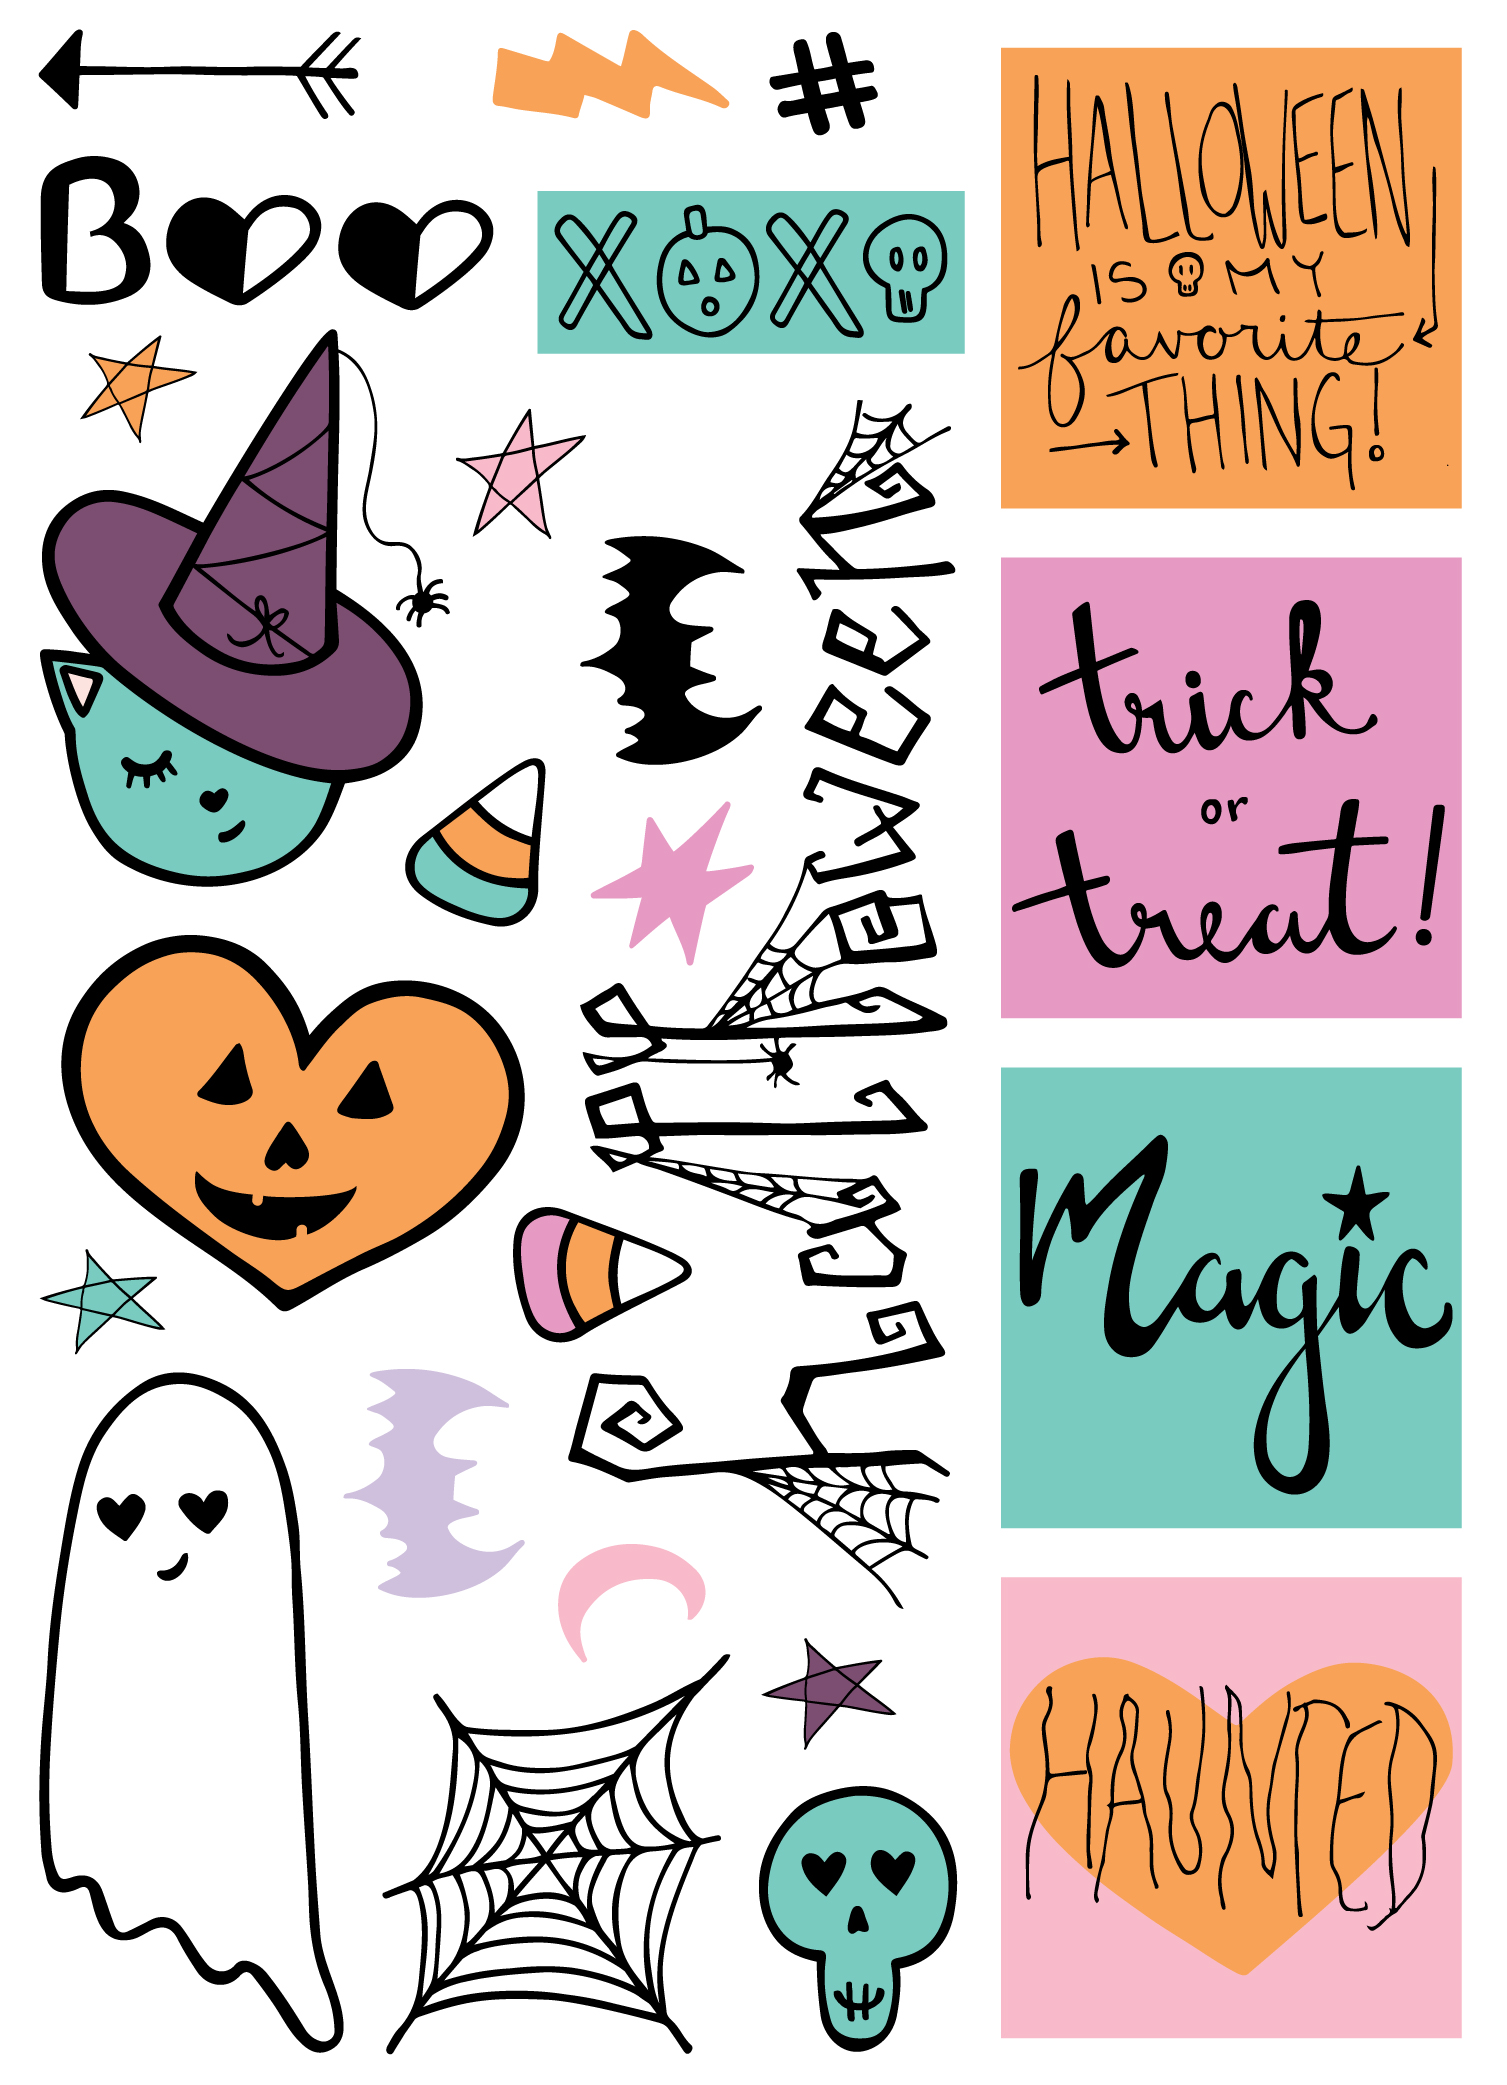 This is Halloween - Digital - Sticker Sheet 1 copy.jpg